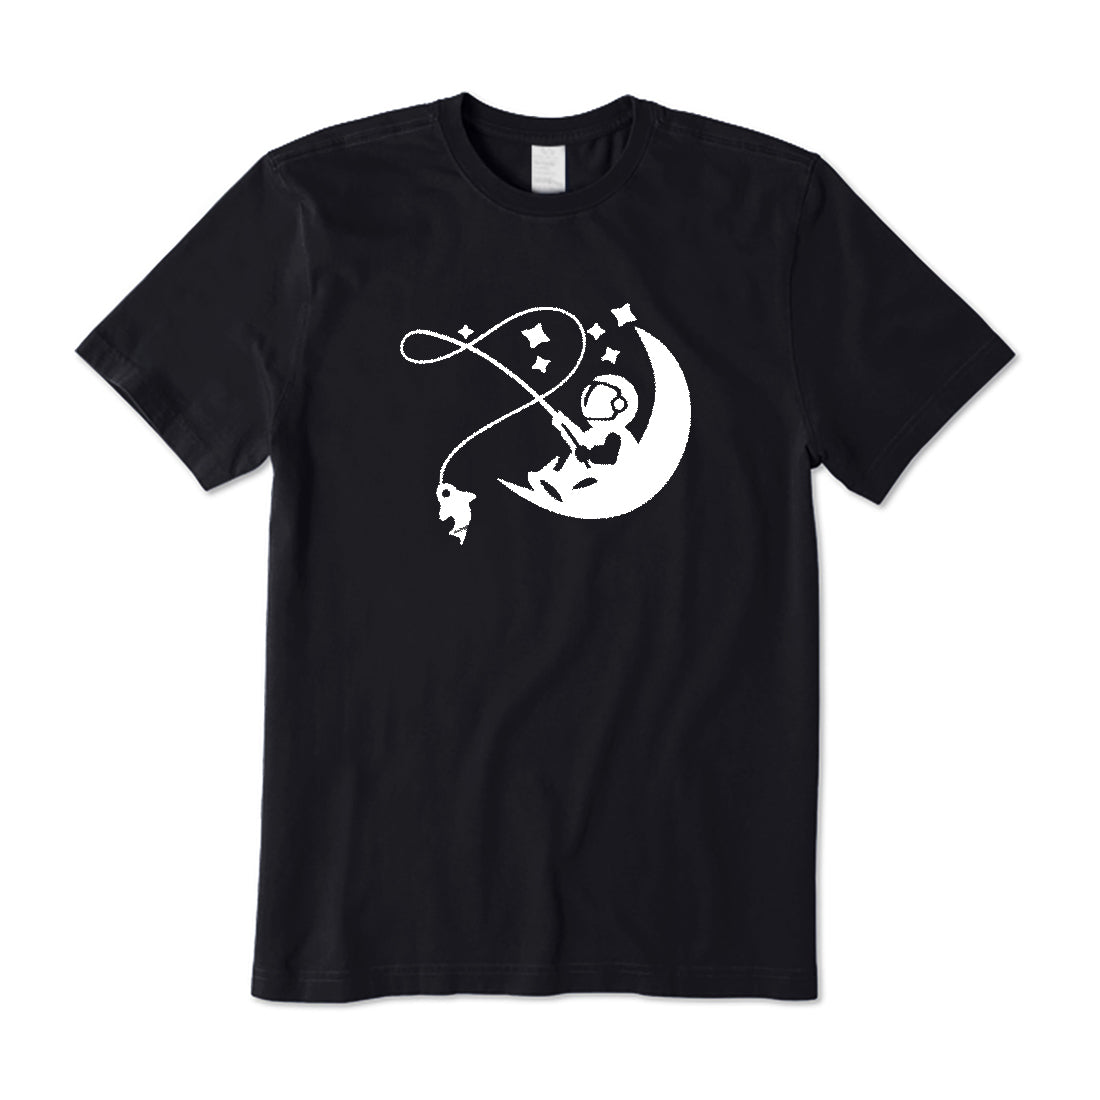 Astronaut Fishing on the Moon T-Shirt